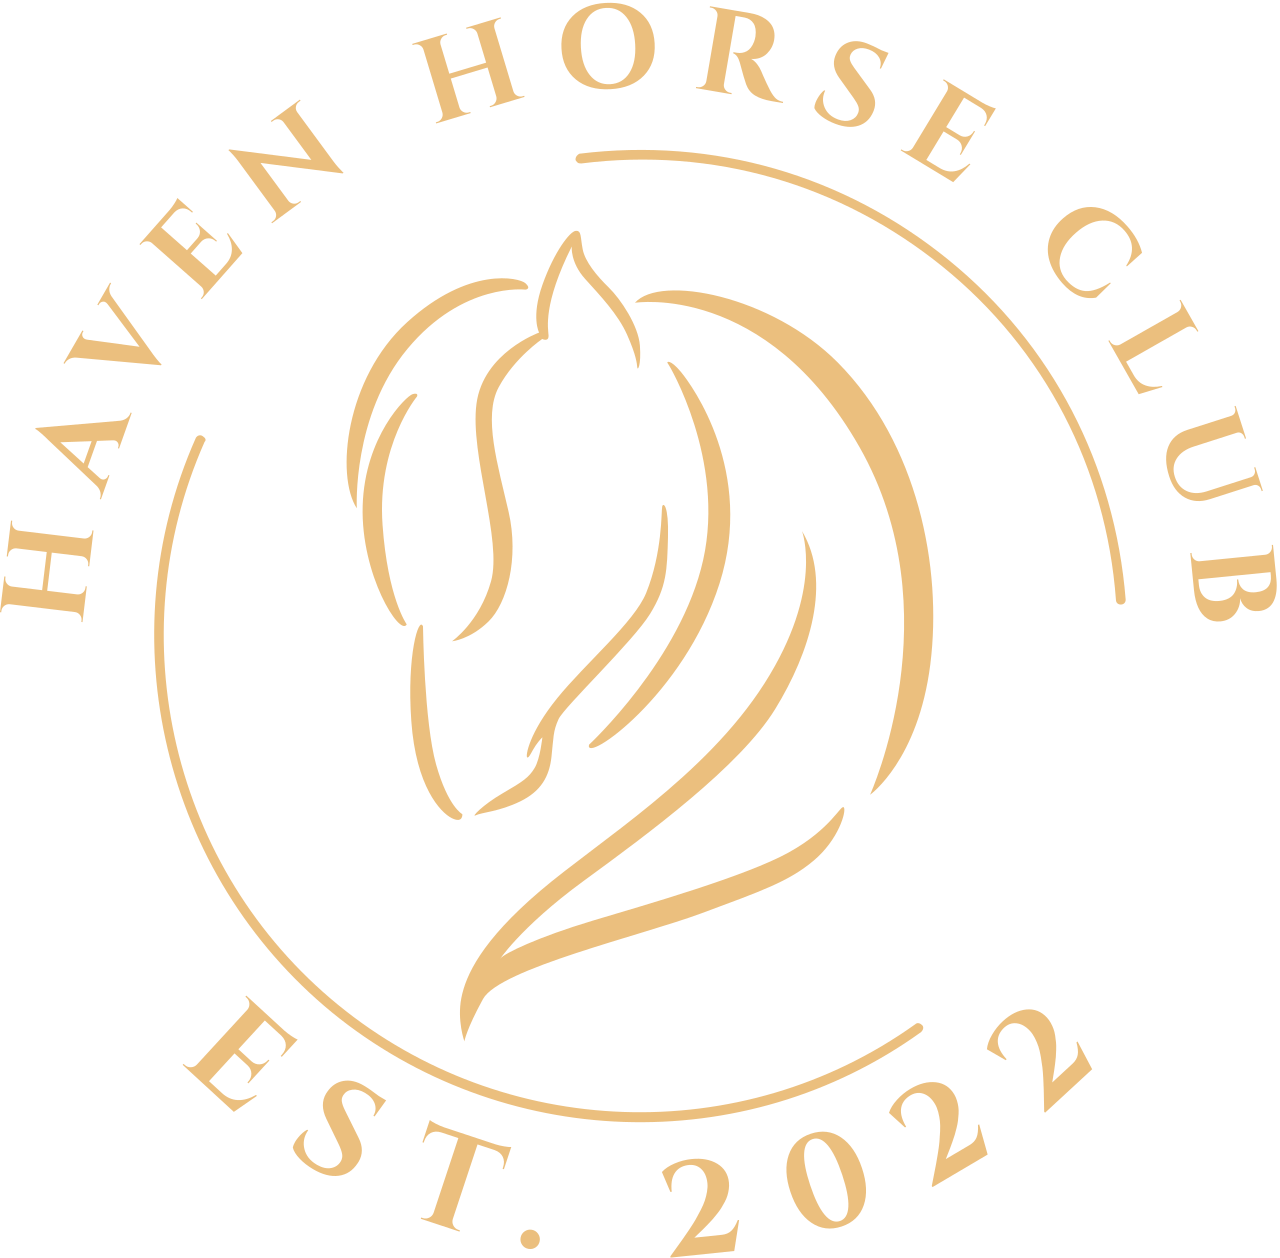 HAVEN HORSE CLUB's logo